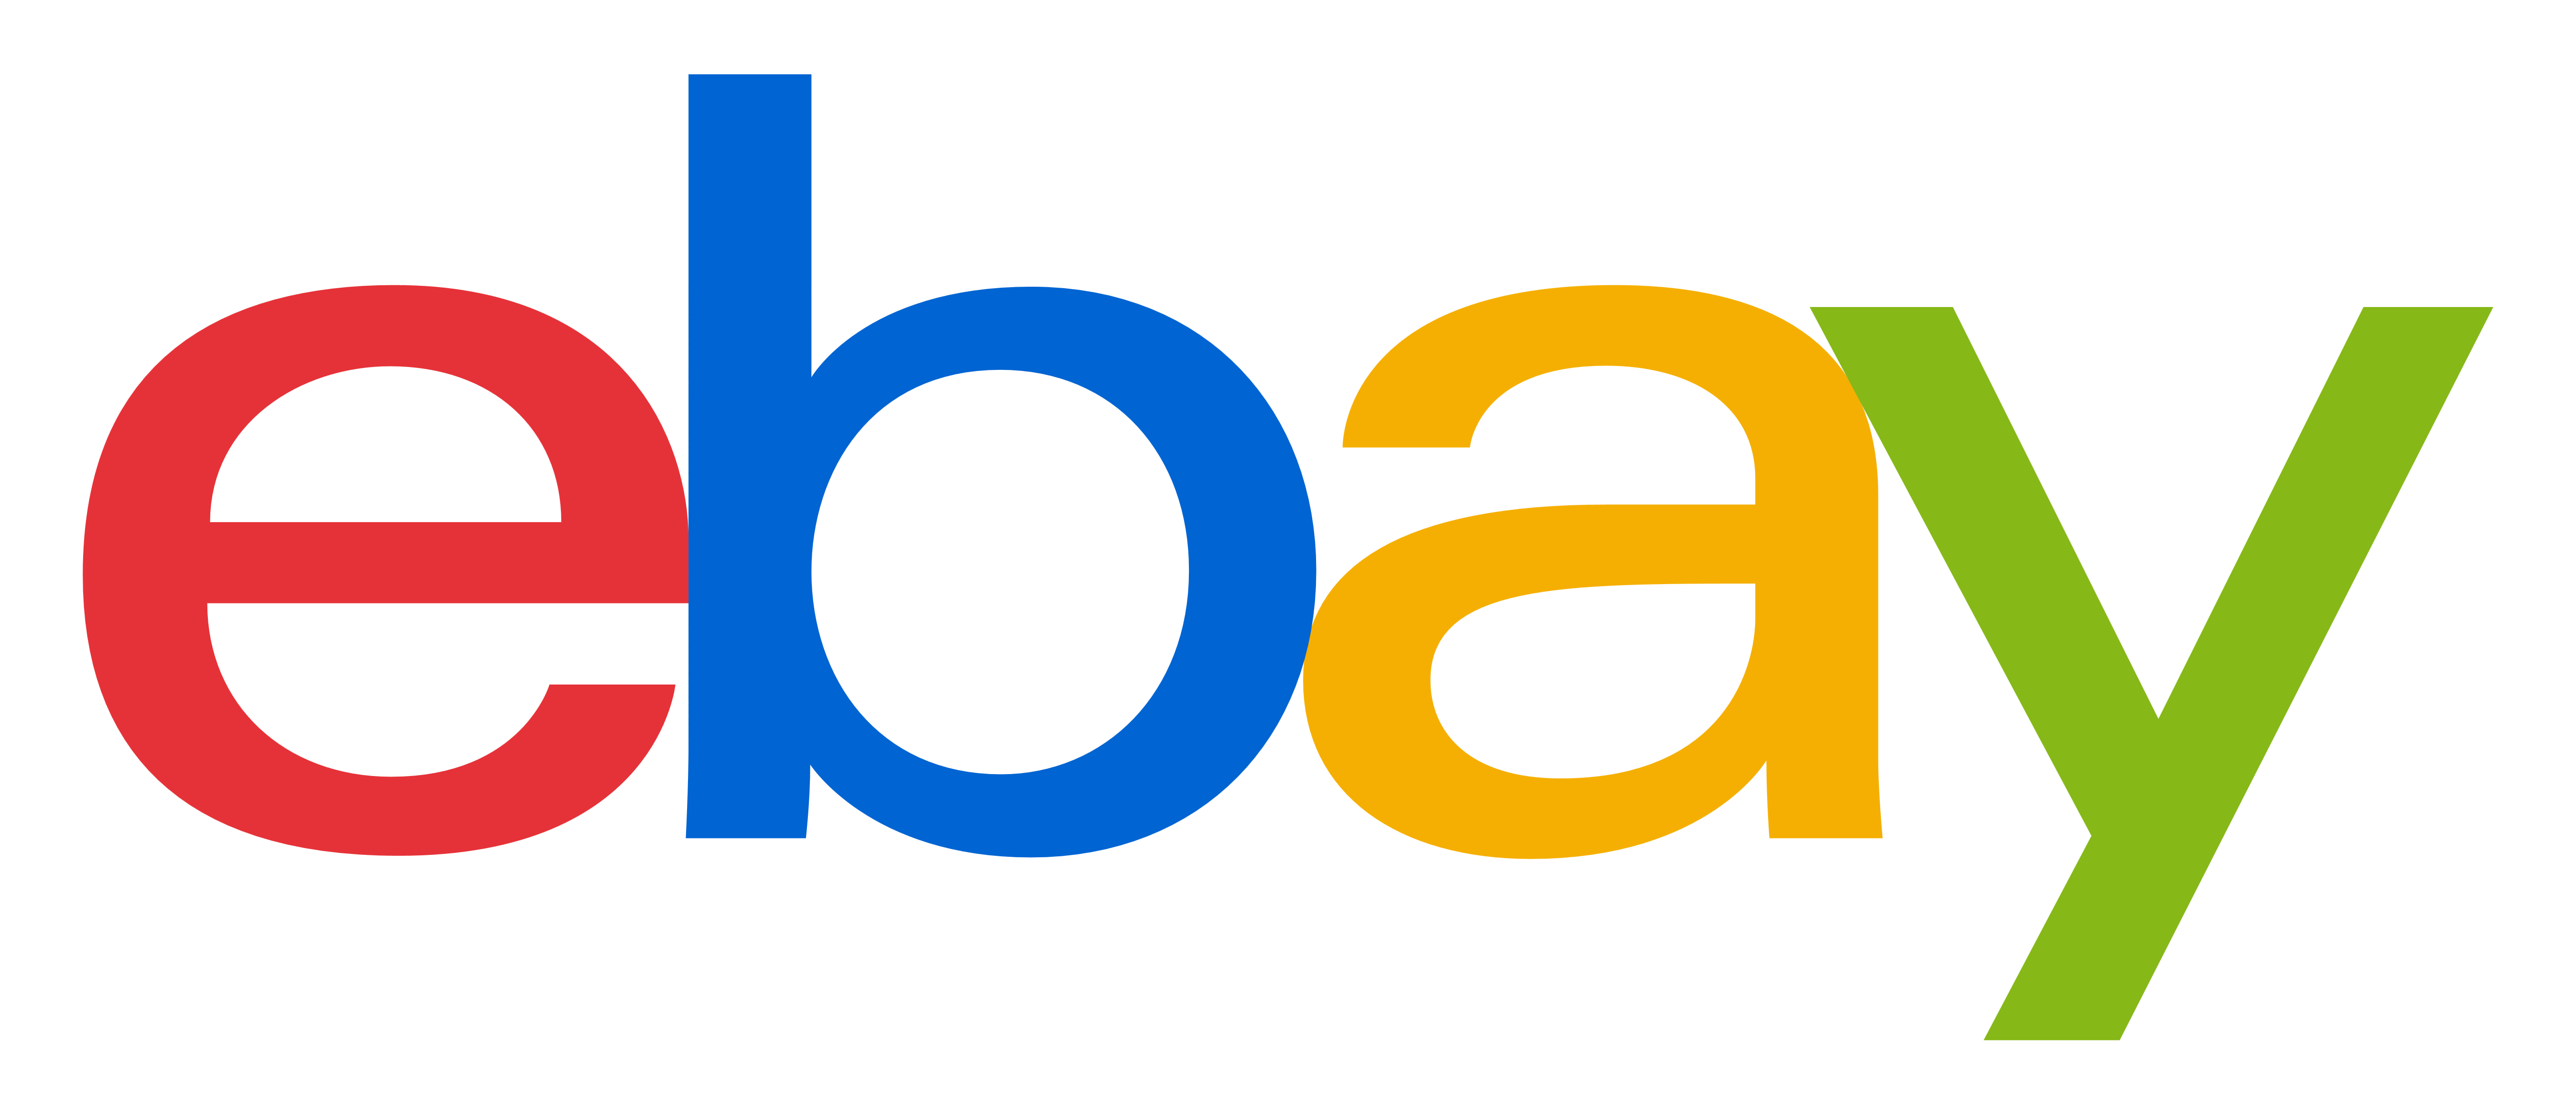 Logo Ebay PNG-PlusPNG.com-532